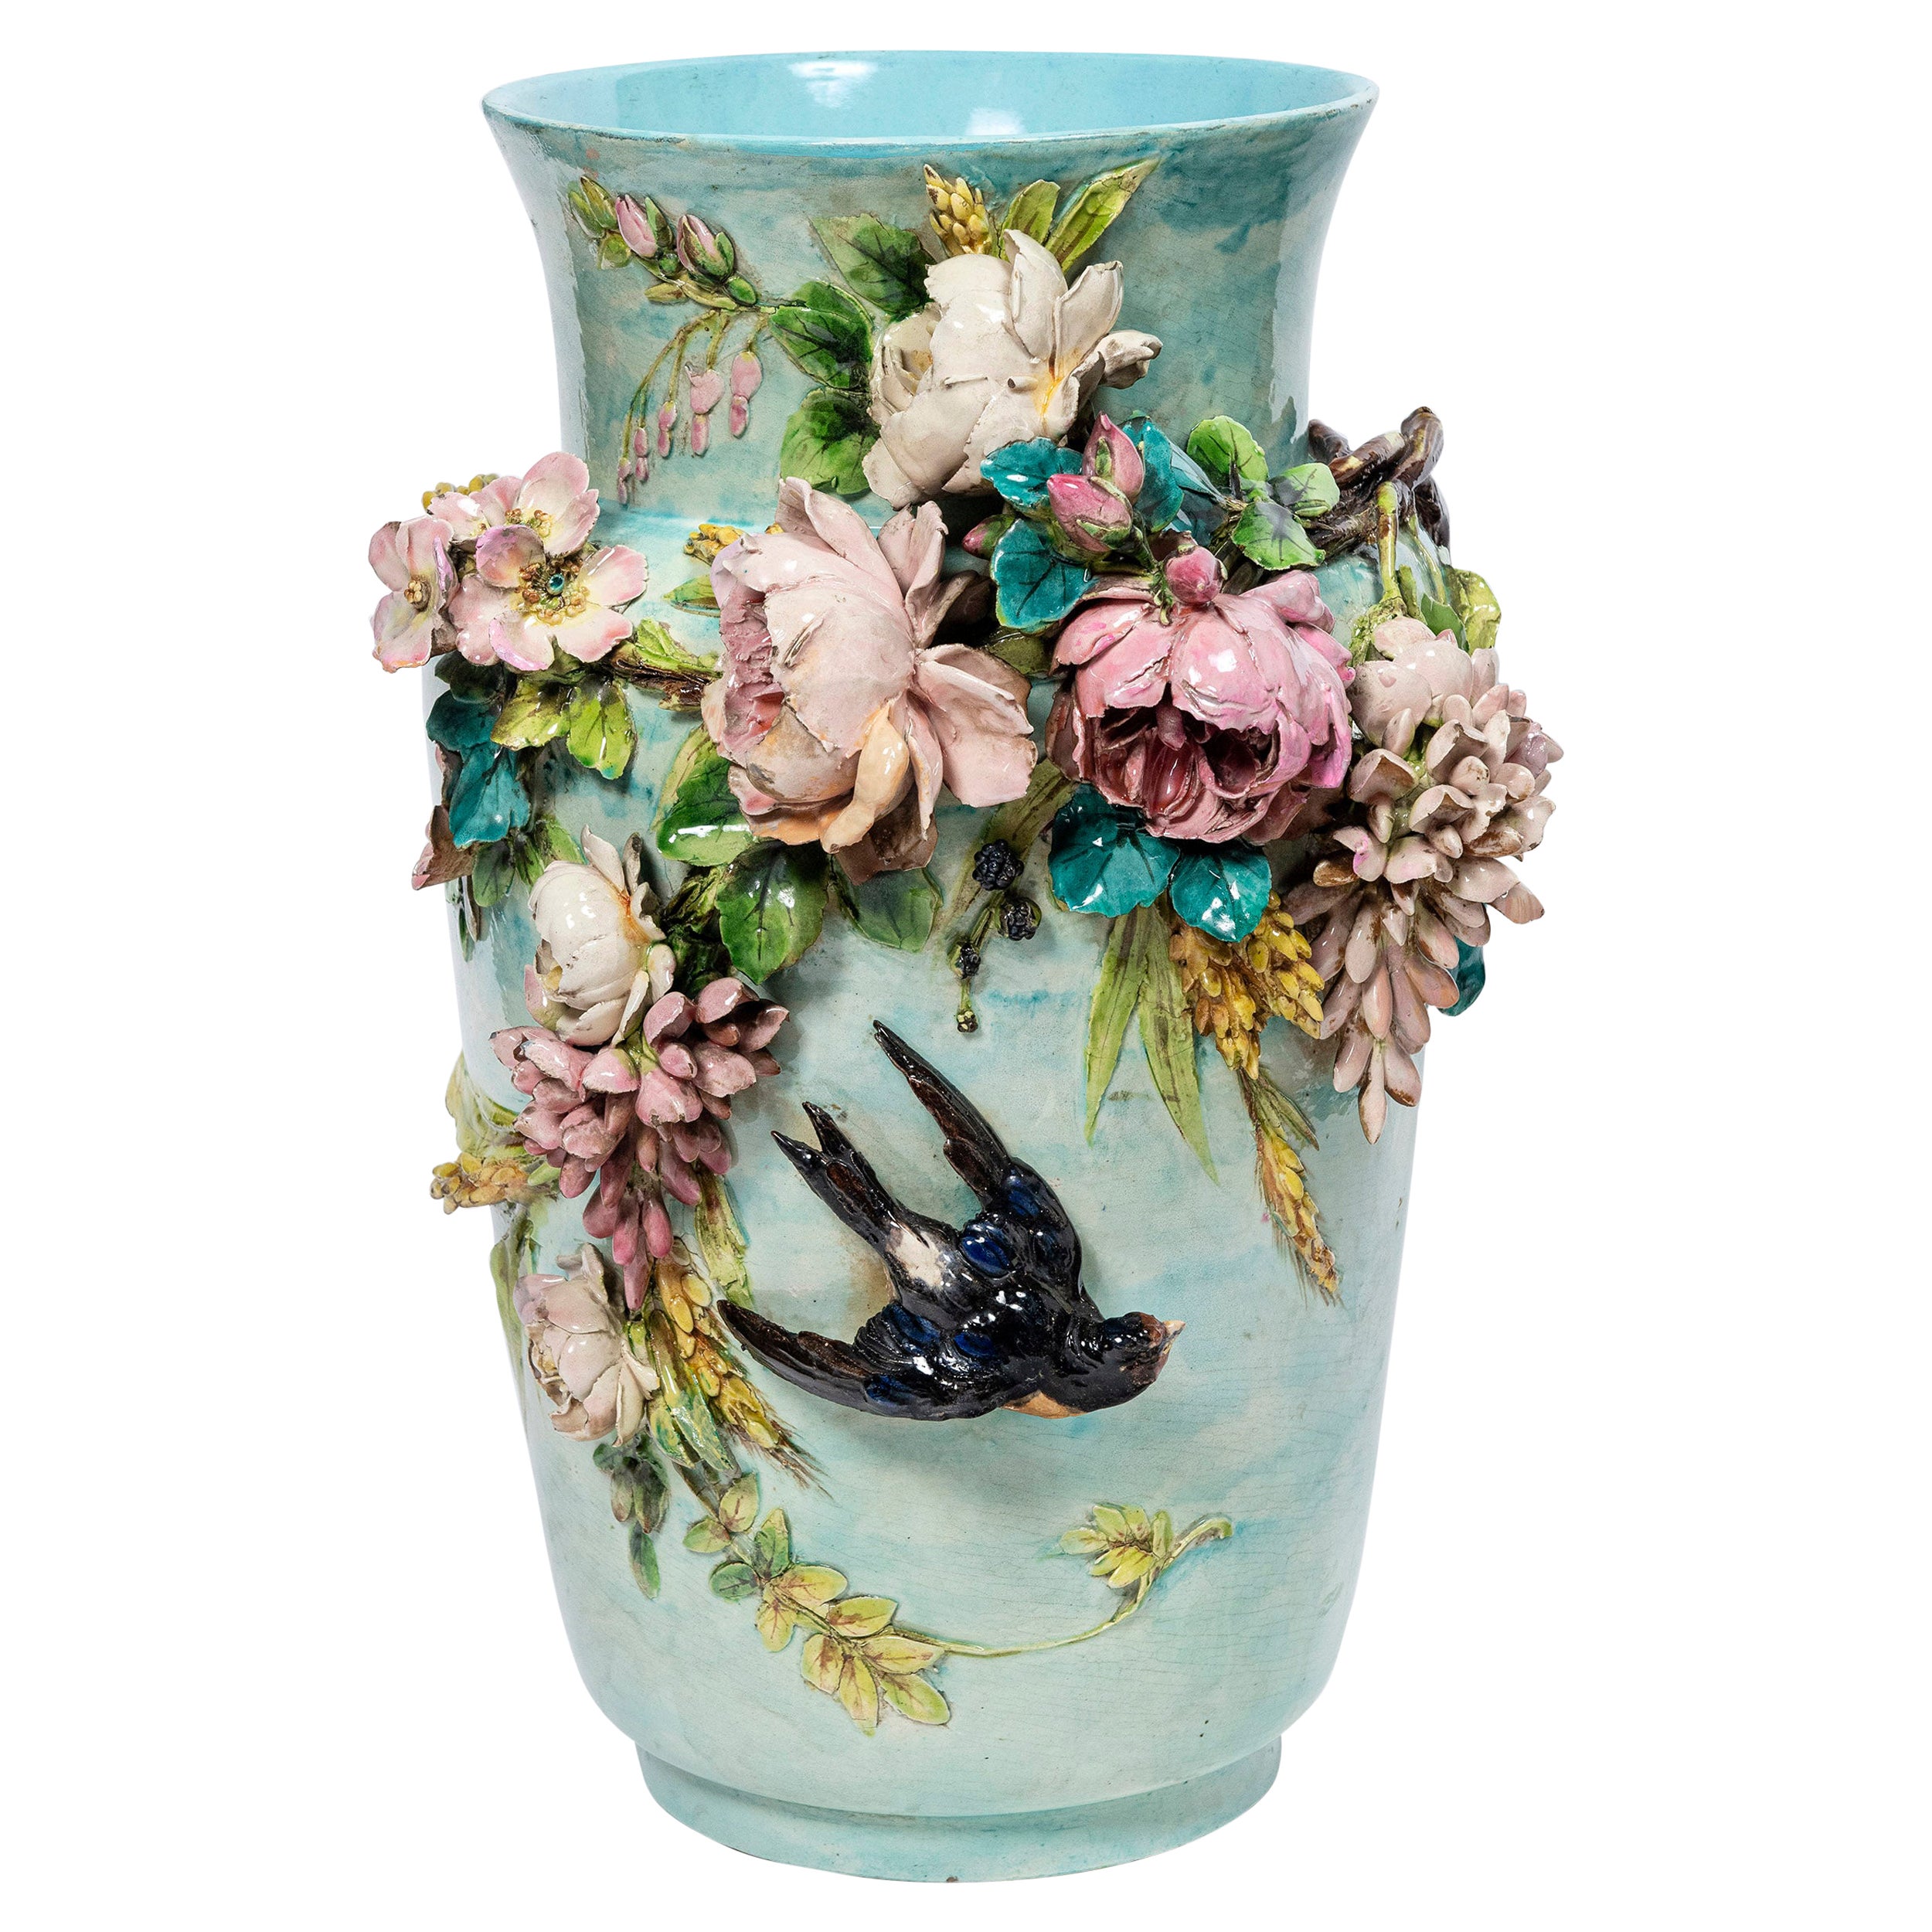 Glazed Ceramic Barbotine Vase with Flowers and Bird, France, circa 1890.